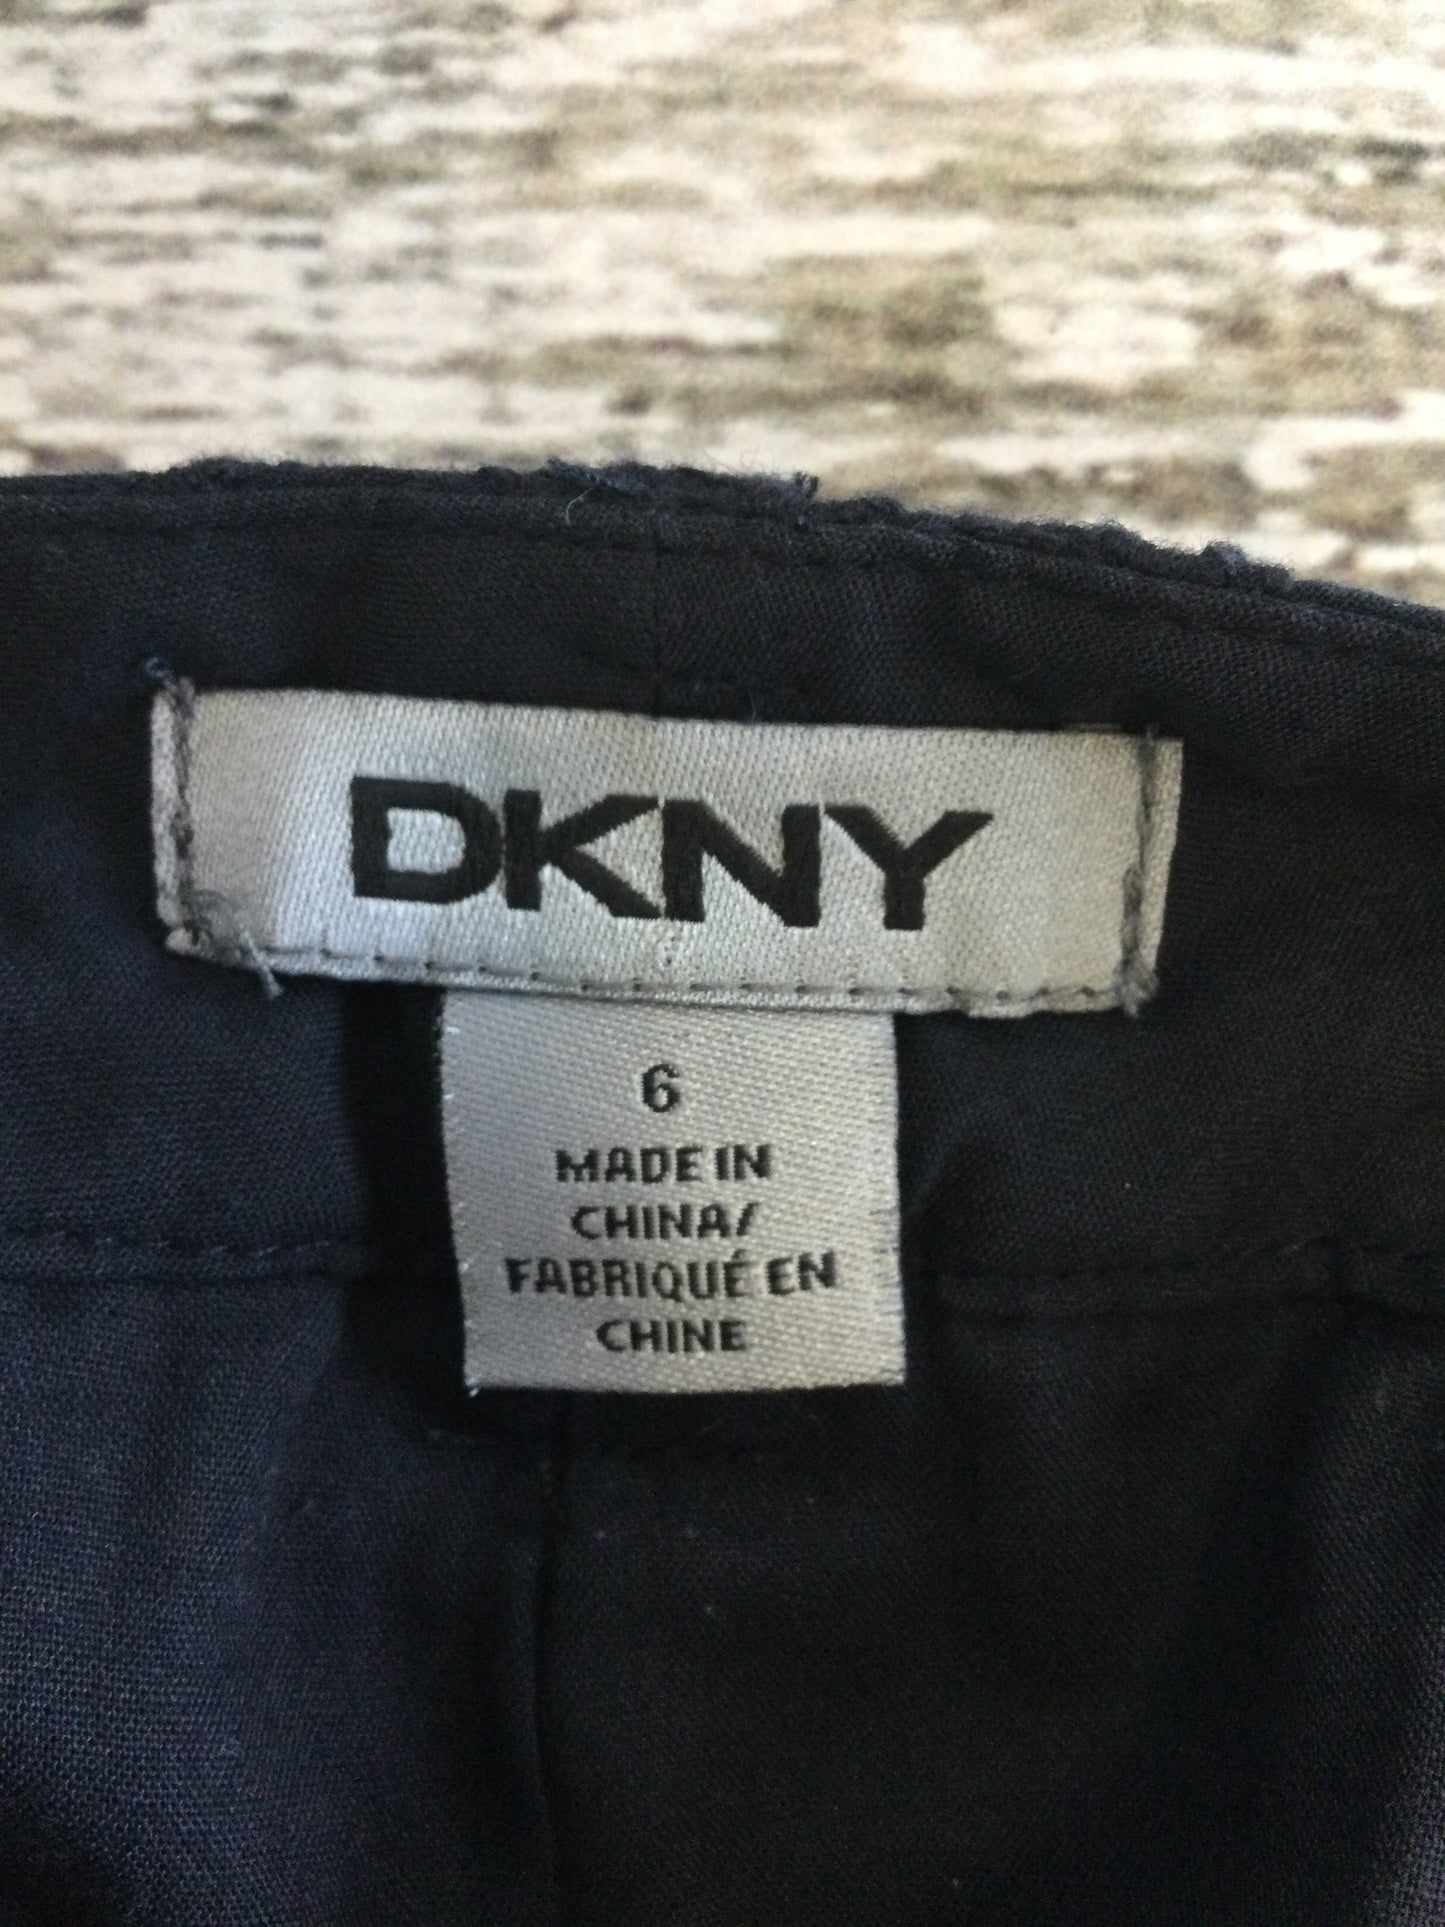 Shorts By Dkny  Size: 6